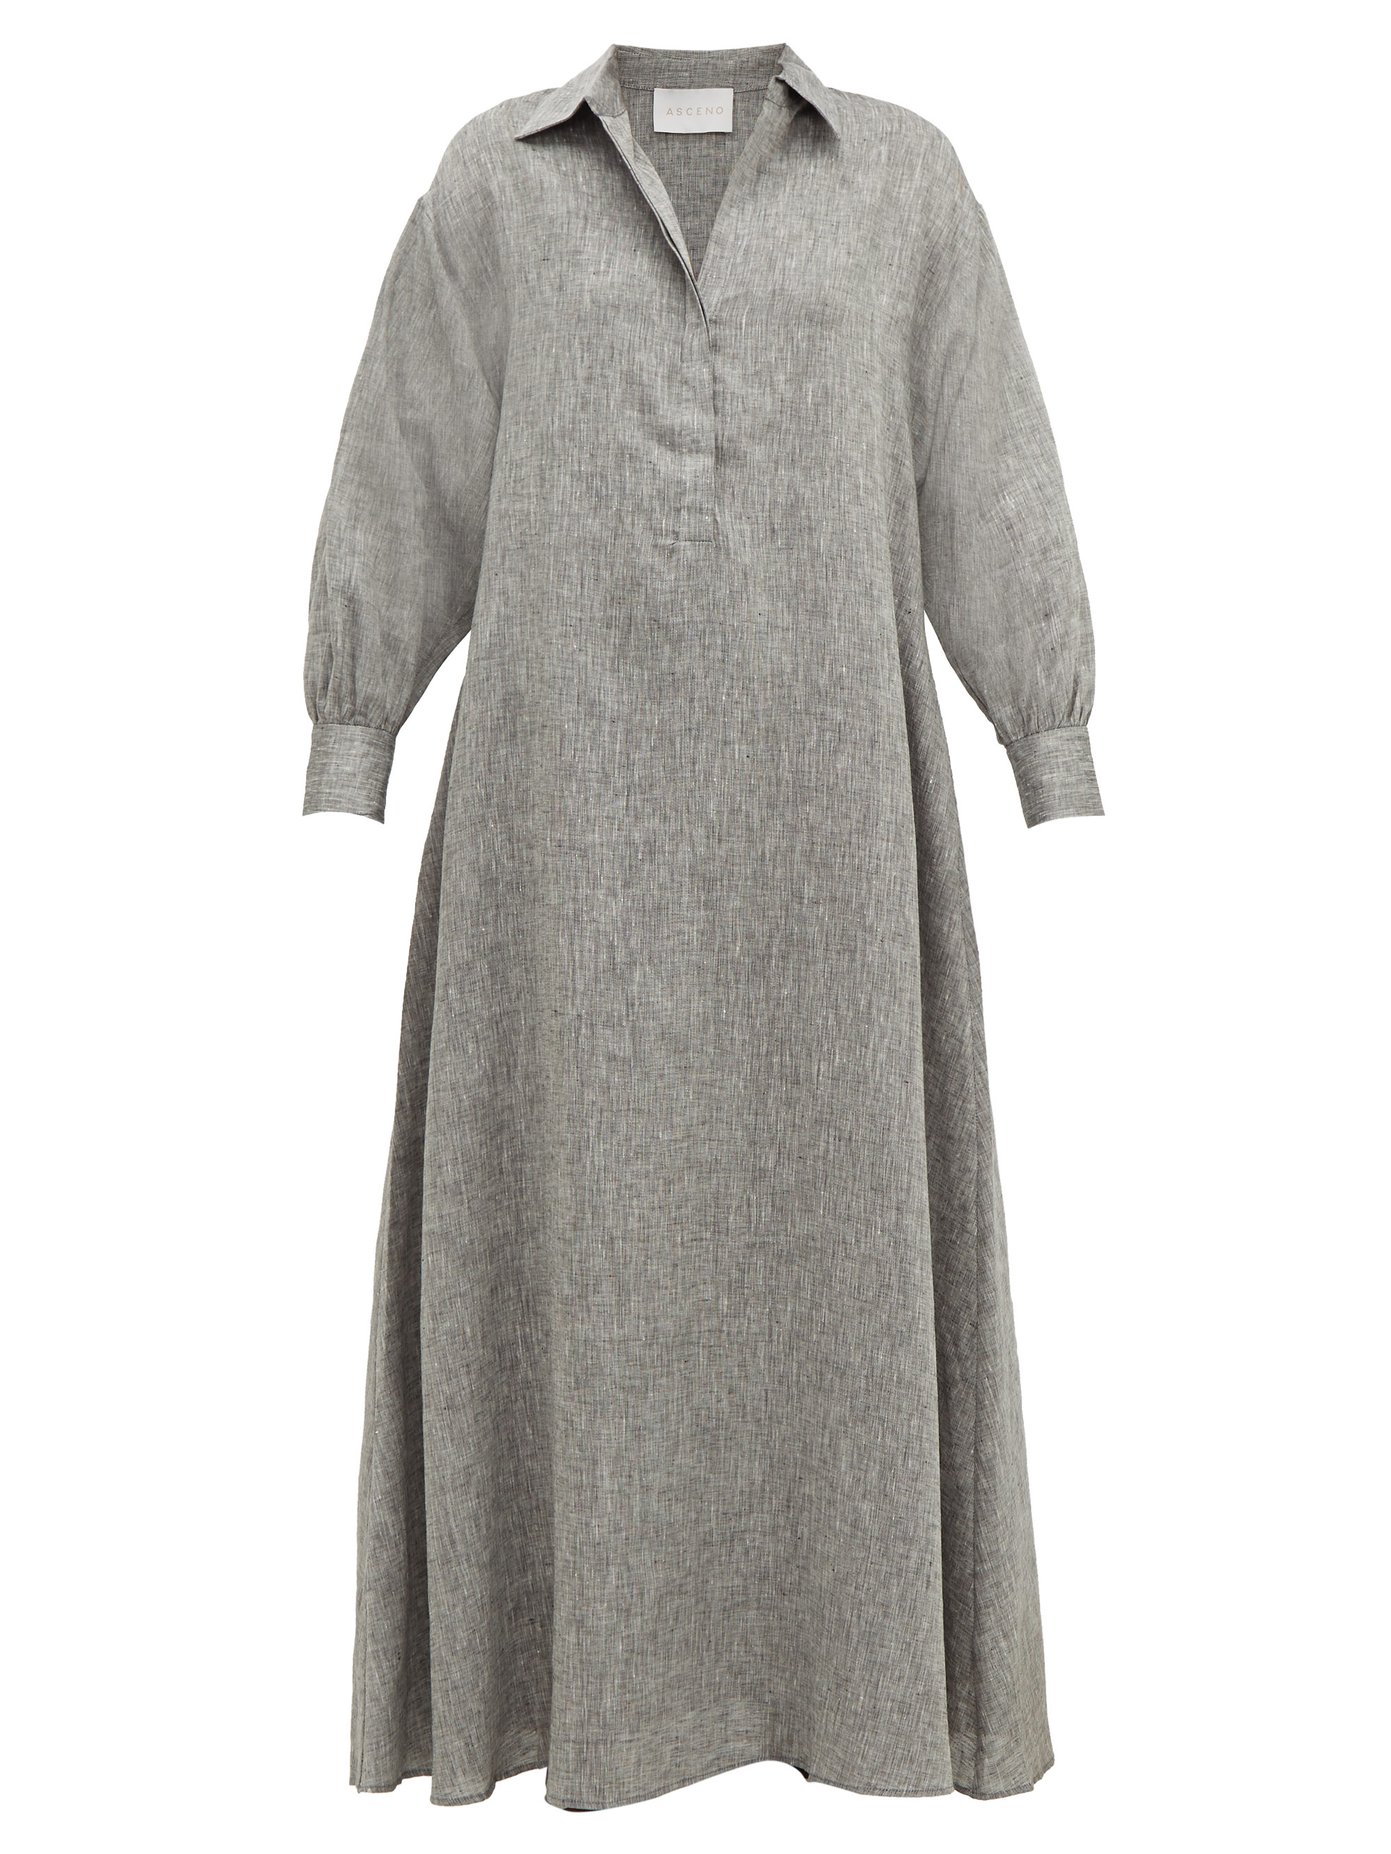 grey linen maxi dress